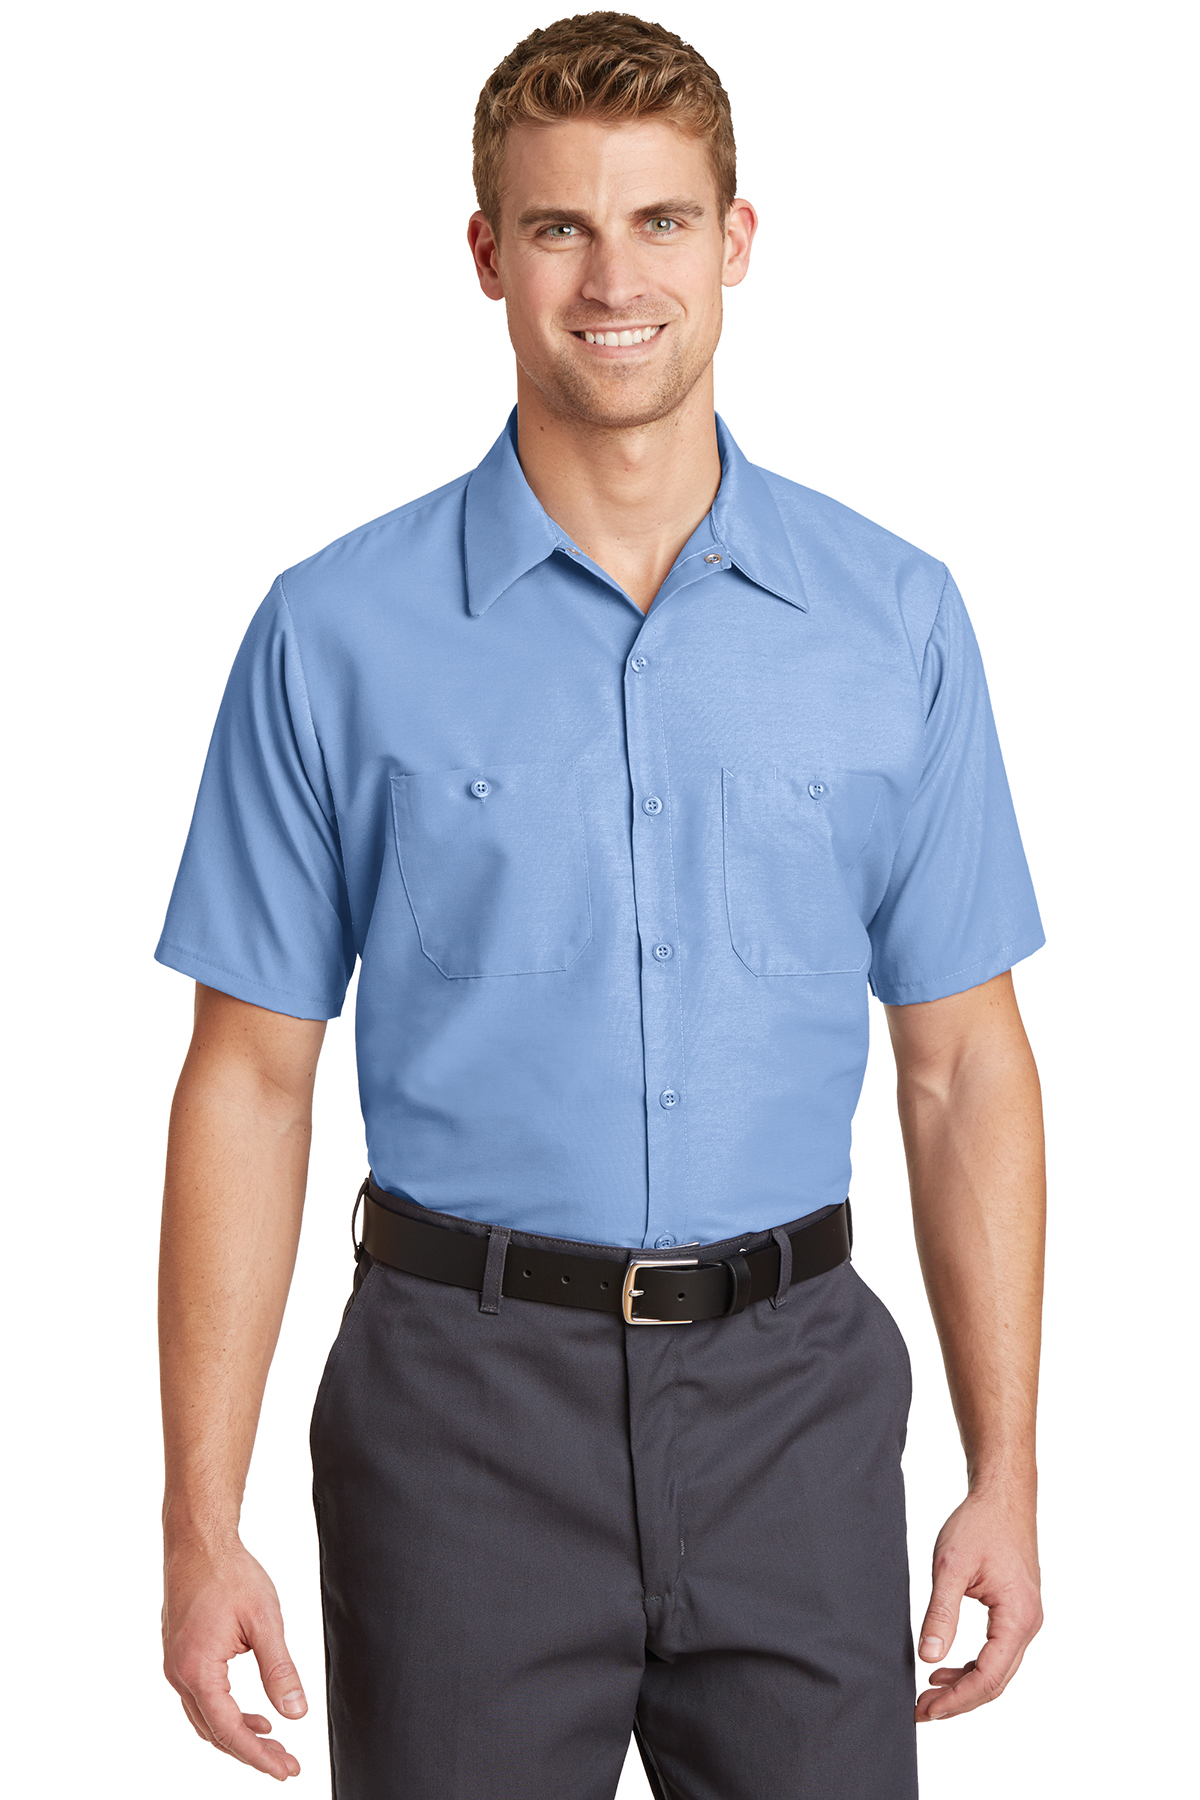 Red Kap Men Industrial 100/% Cotton Work Shirt Navy//Light Blue//Gray// Khaki NEW